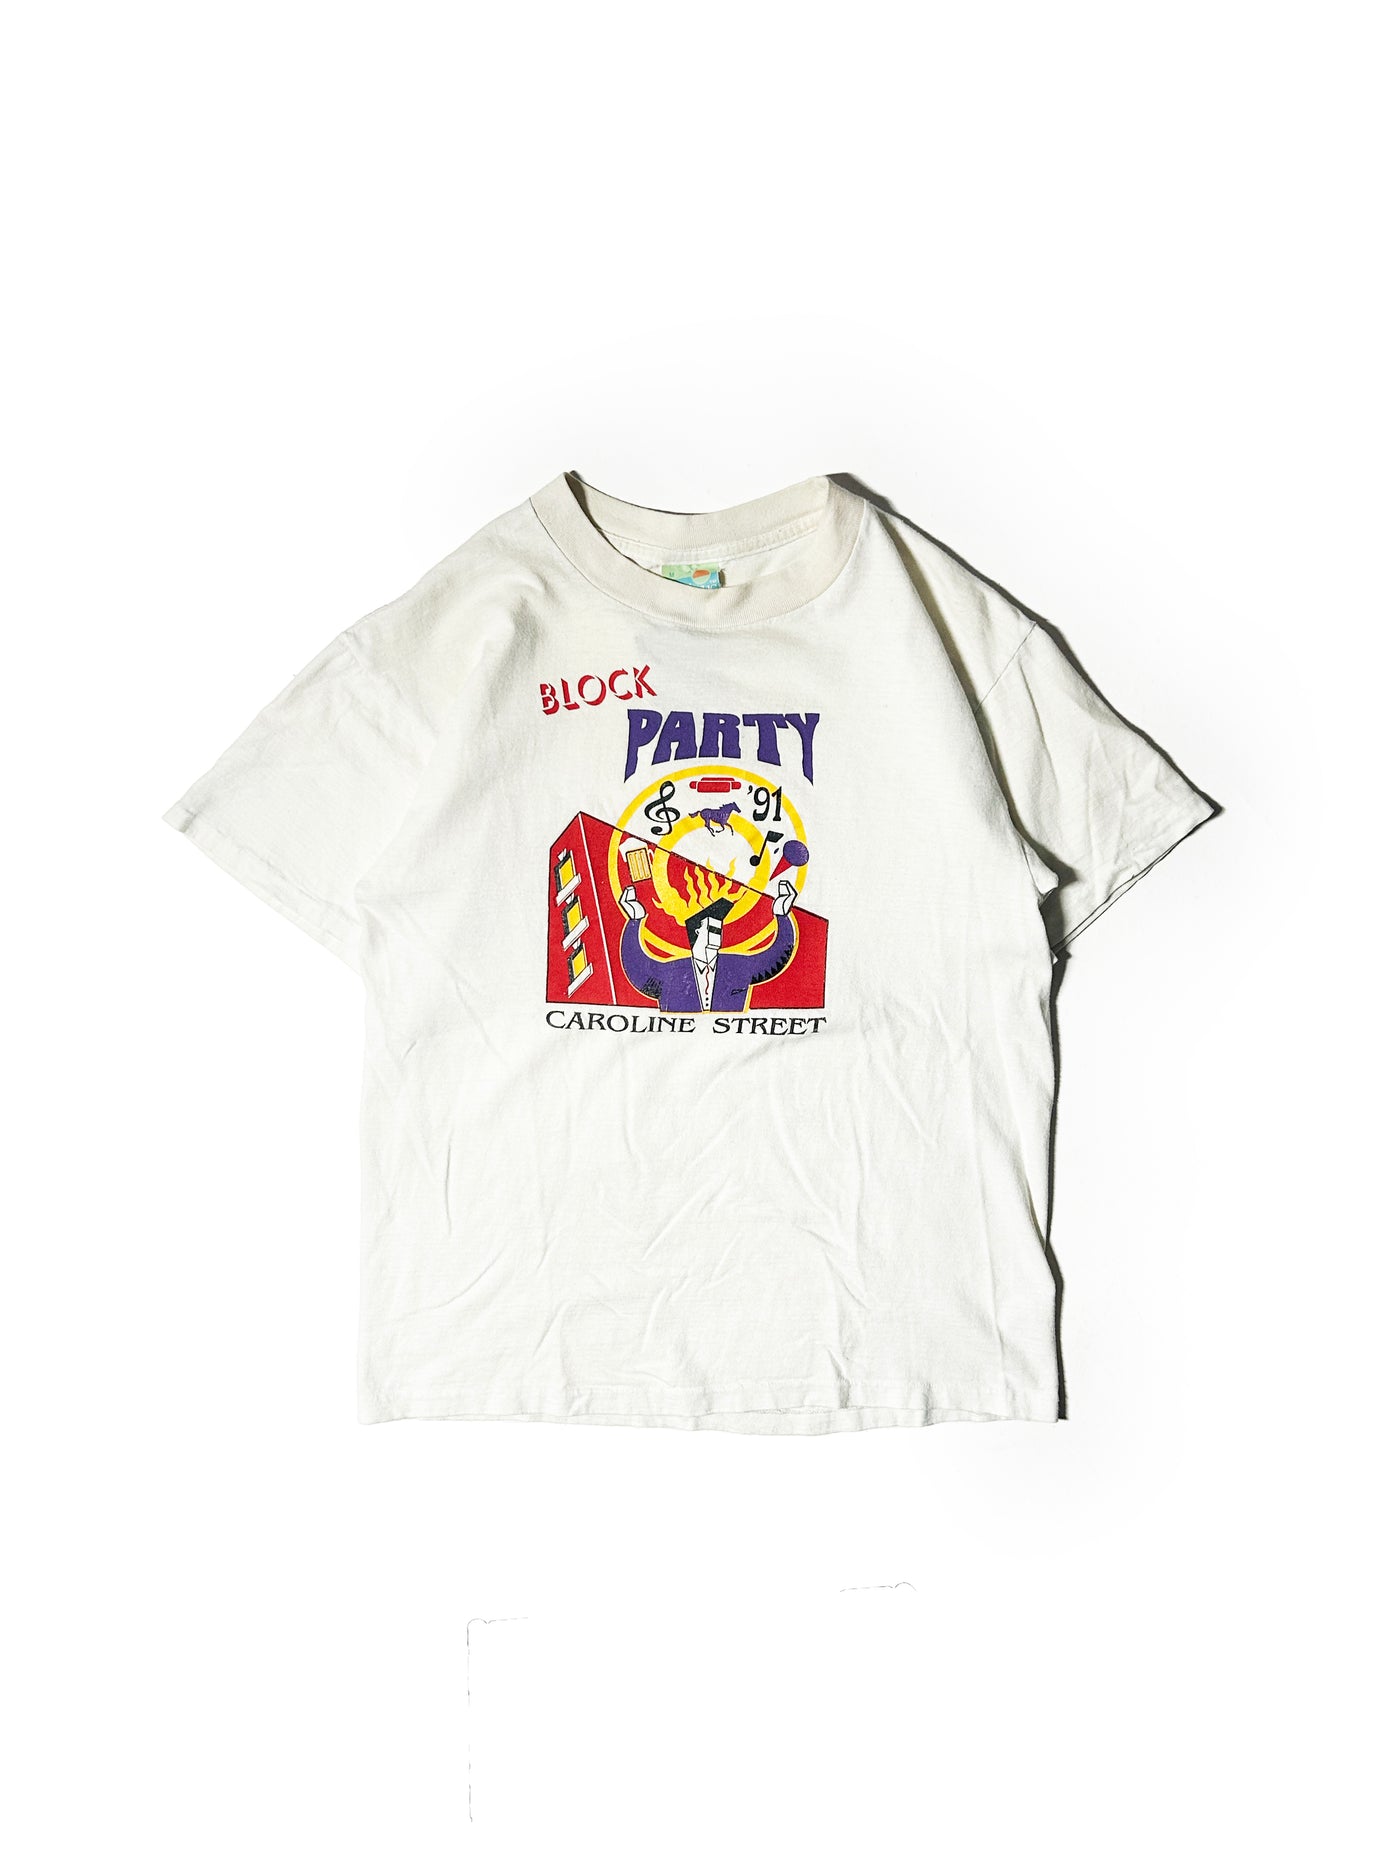 Vintage 1991 Caroline Street Block Party Saratoga City Tavern T-Shirt